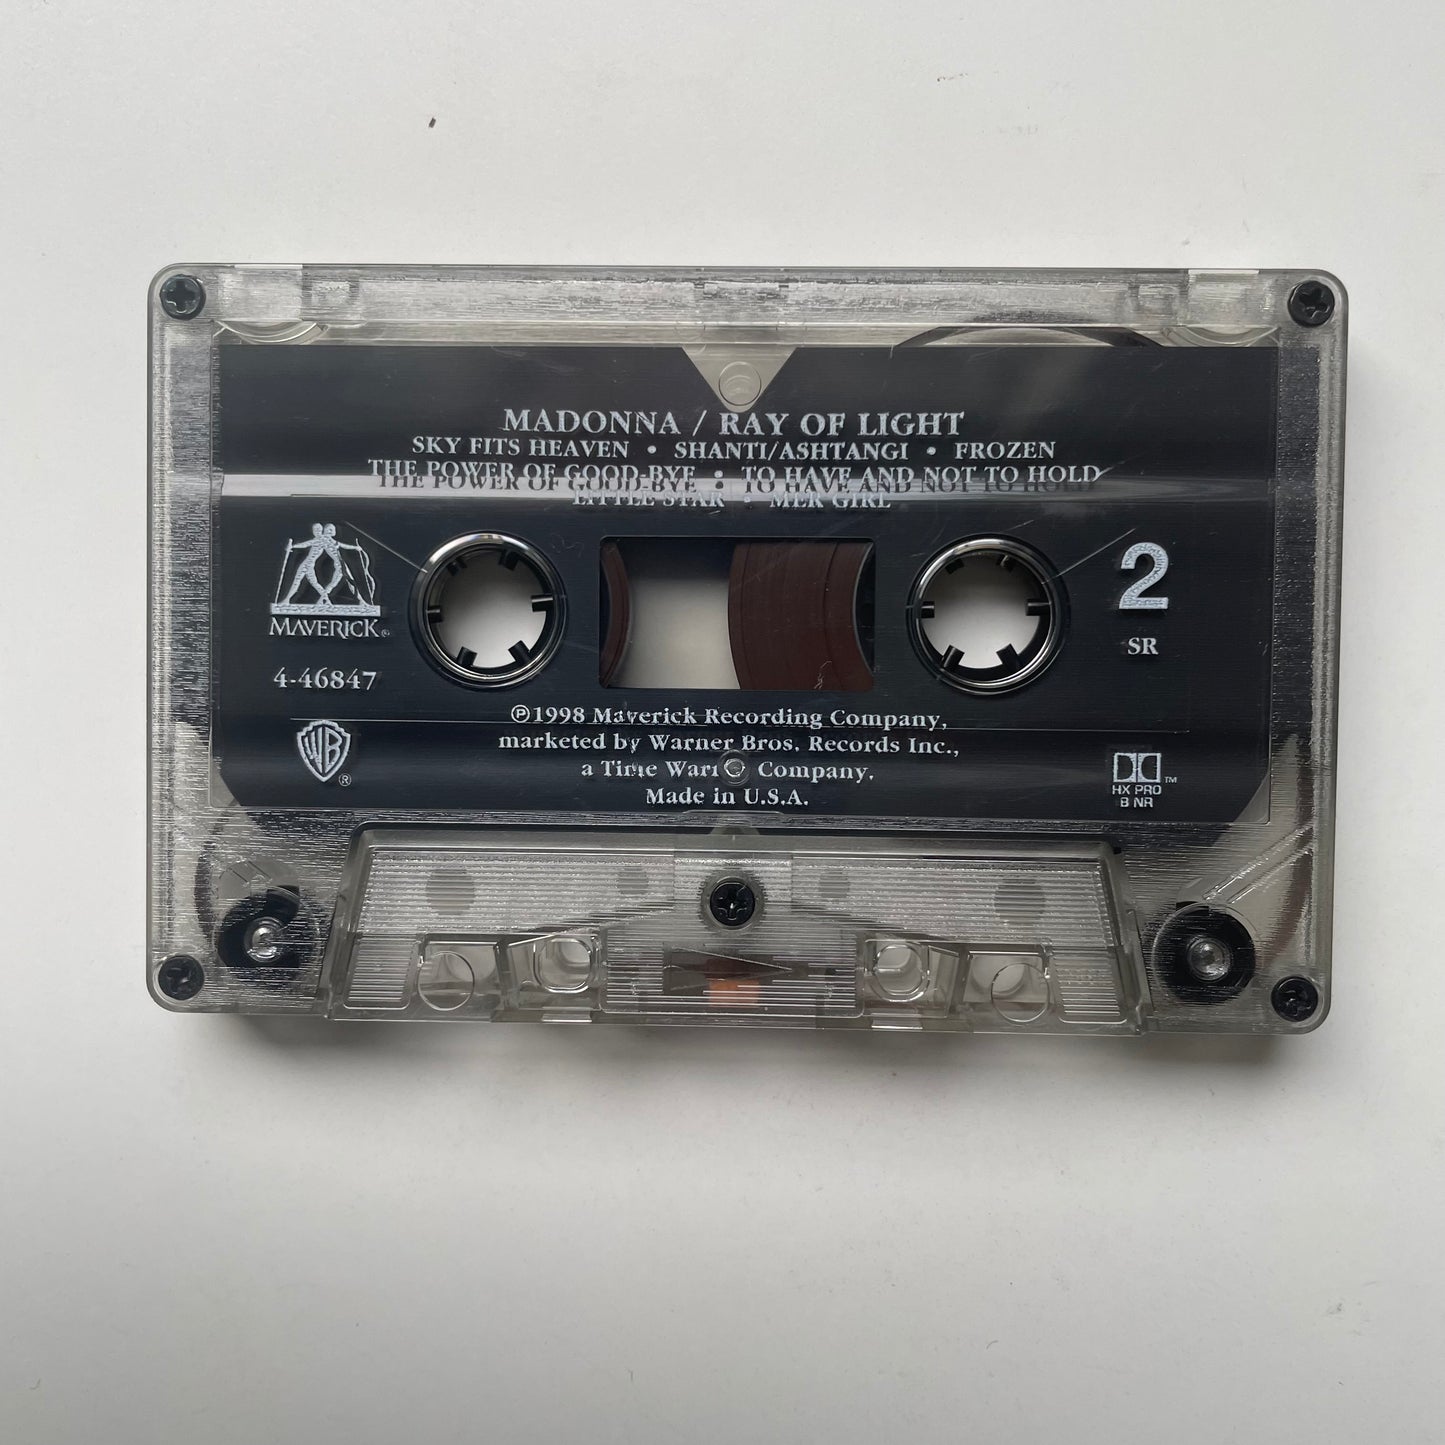 Tape Cassette Madonna Ray of Light 1998 side 2 